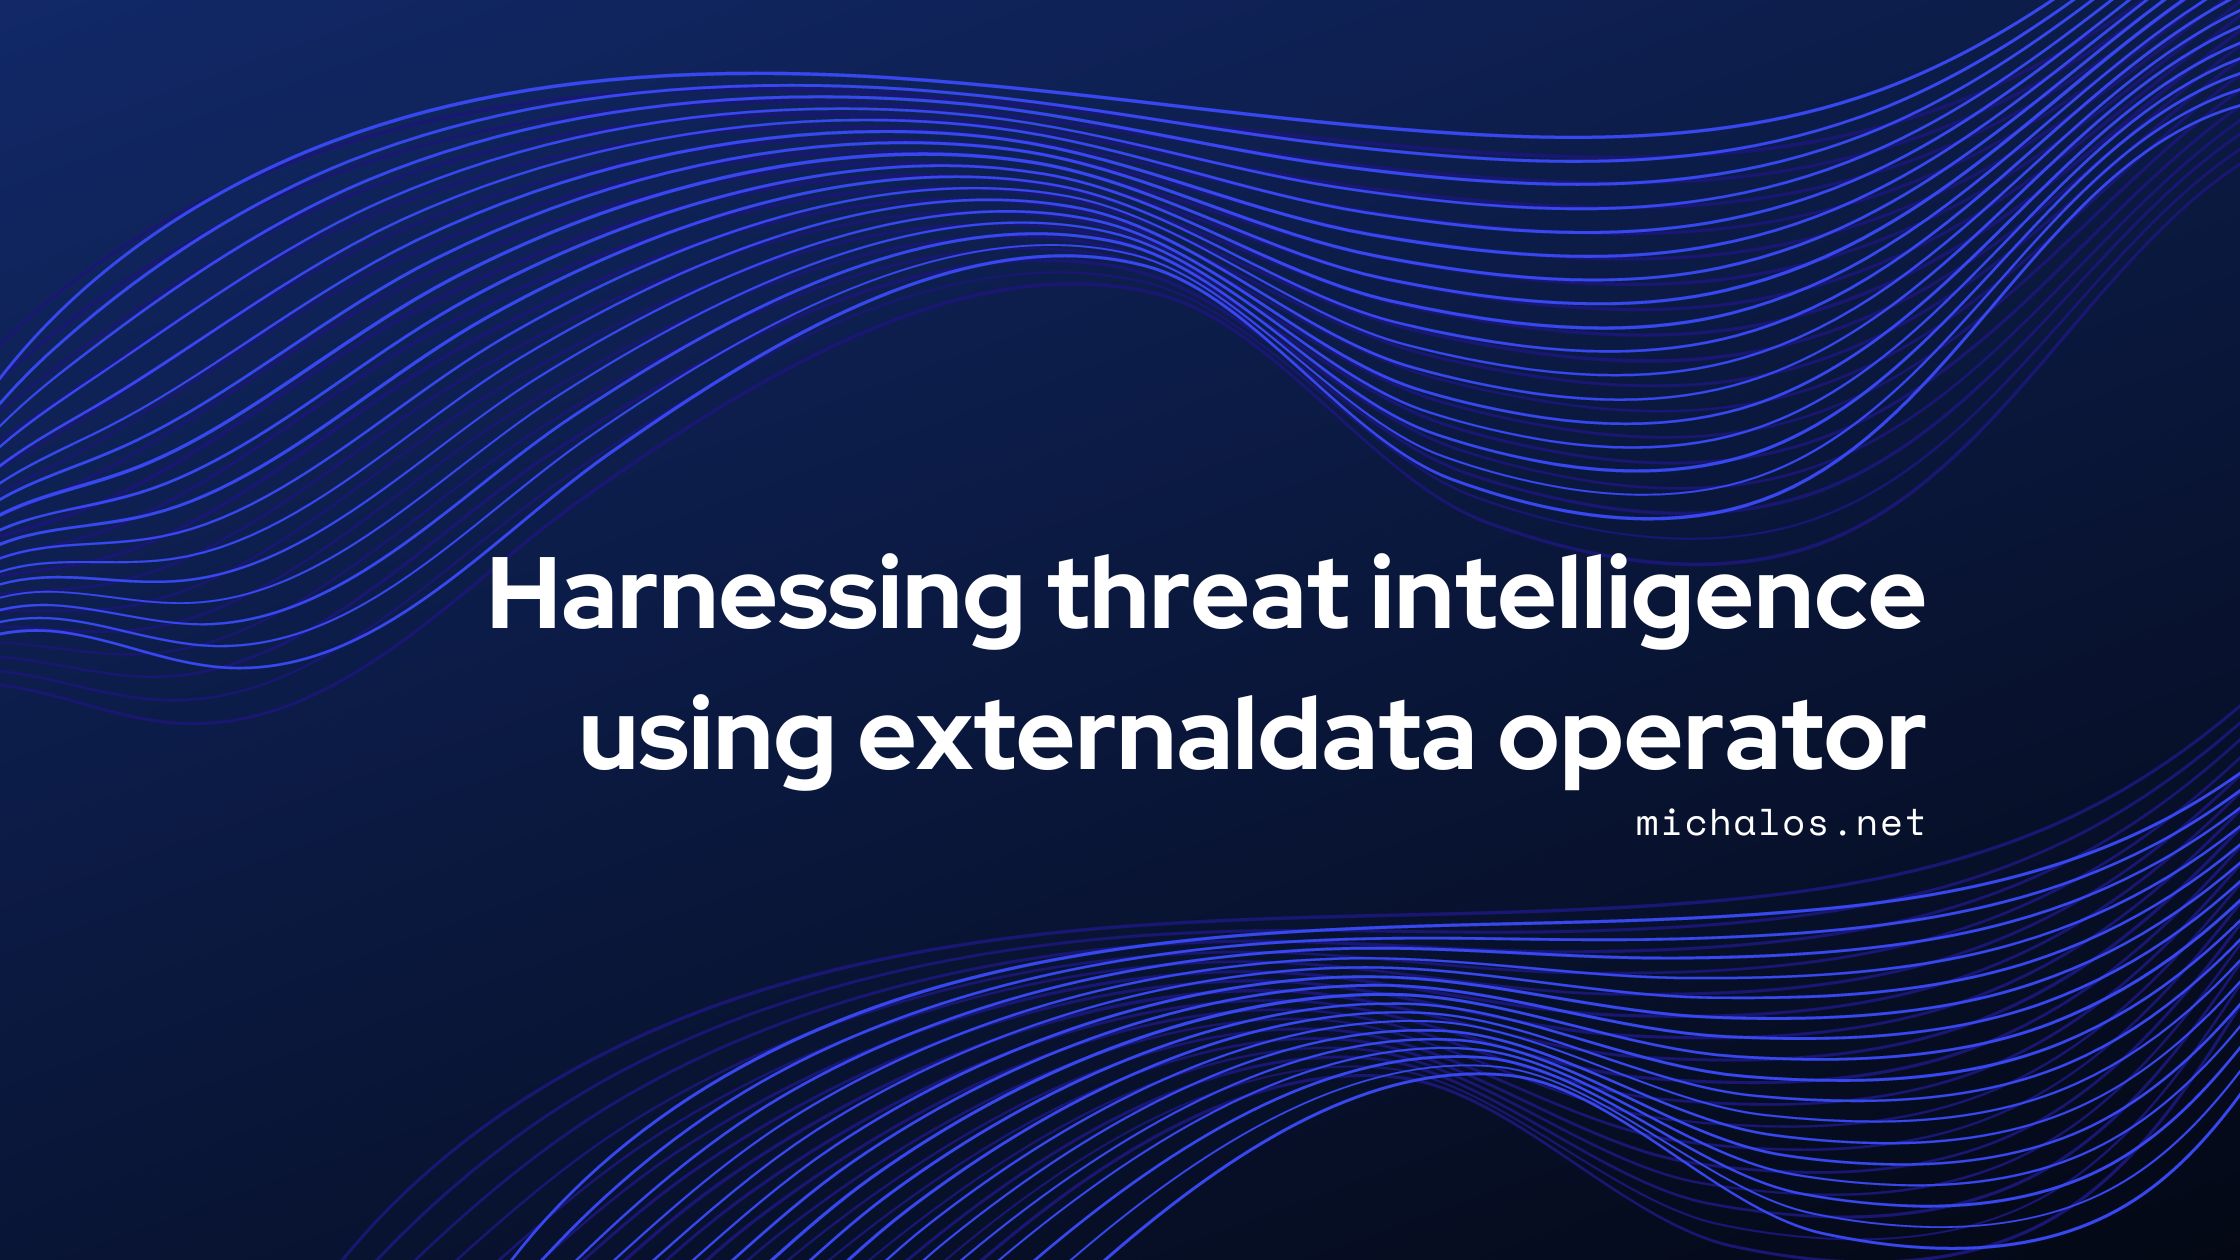 Harnessing threat intelligence using externaldata operator